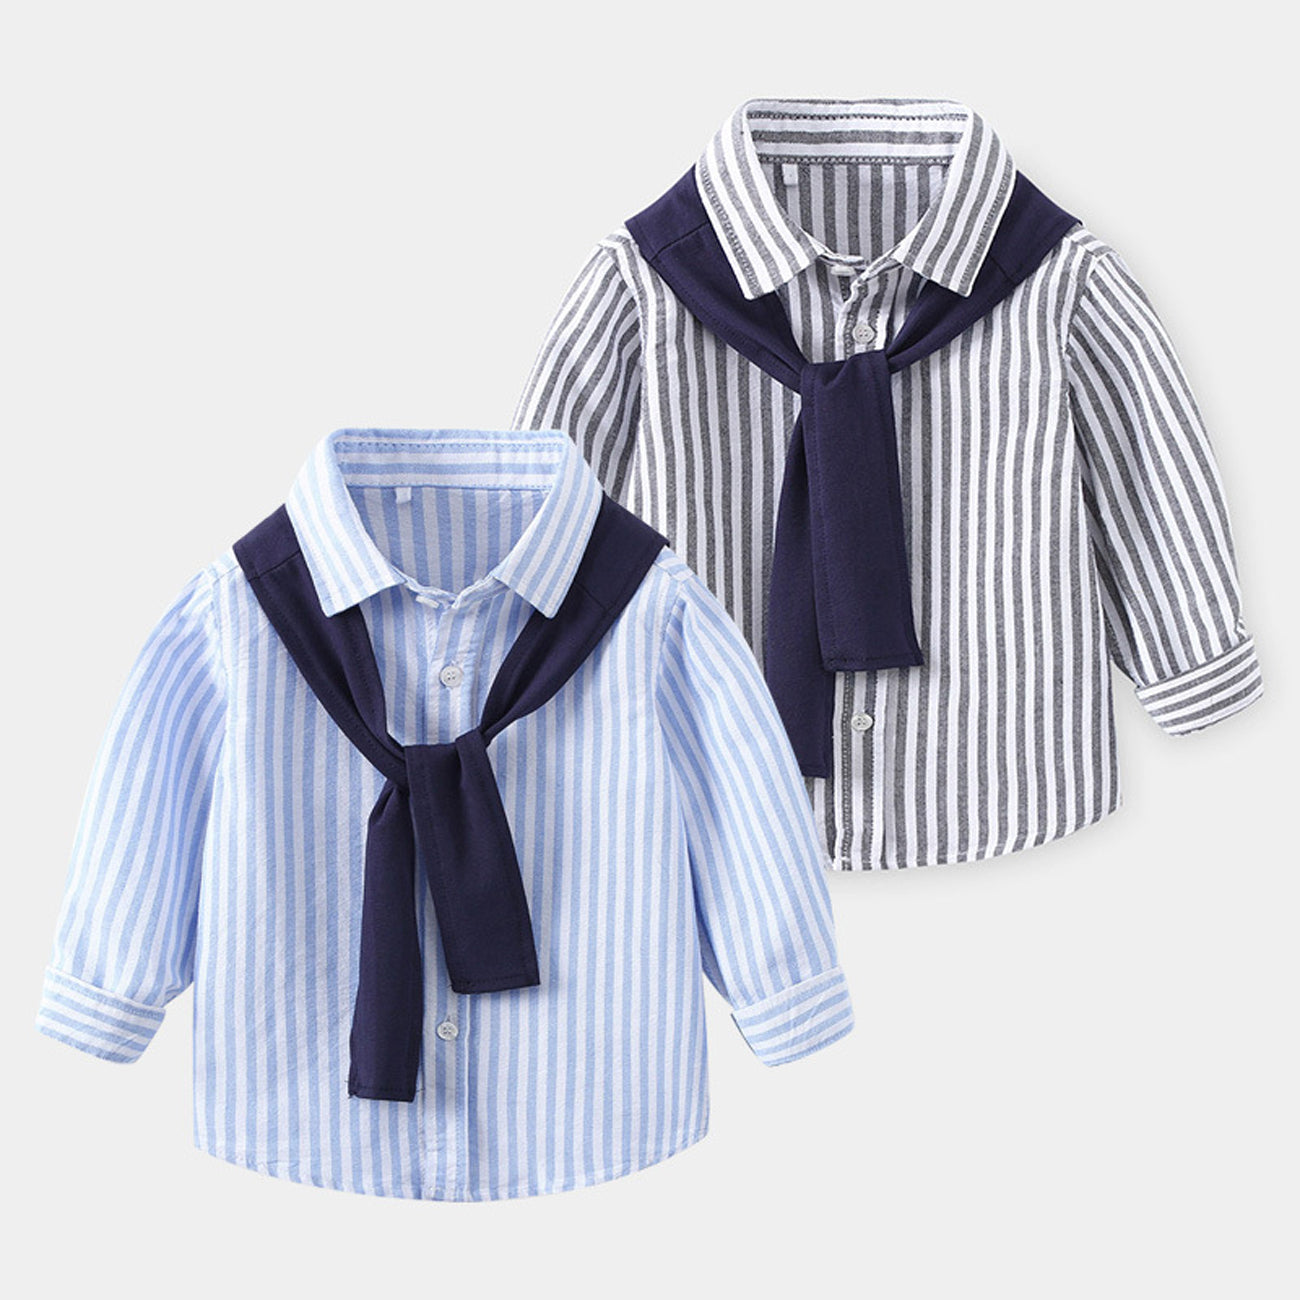 [5131045] - Baju Atasan Kemeja Garis-Garis Fashion Import Anak Laki-laki - Motif Fabric Line